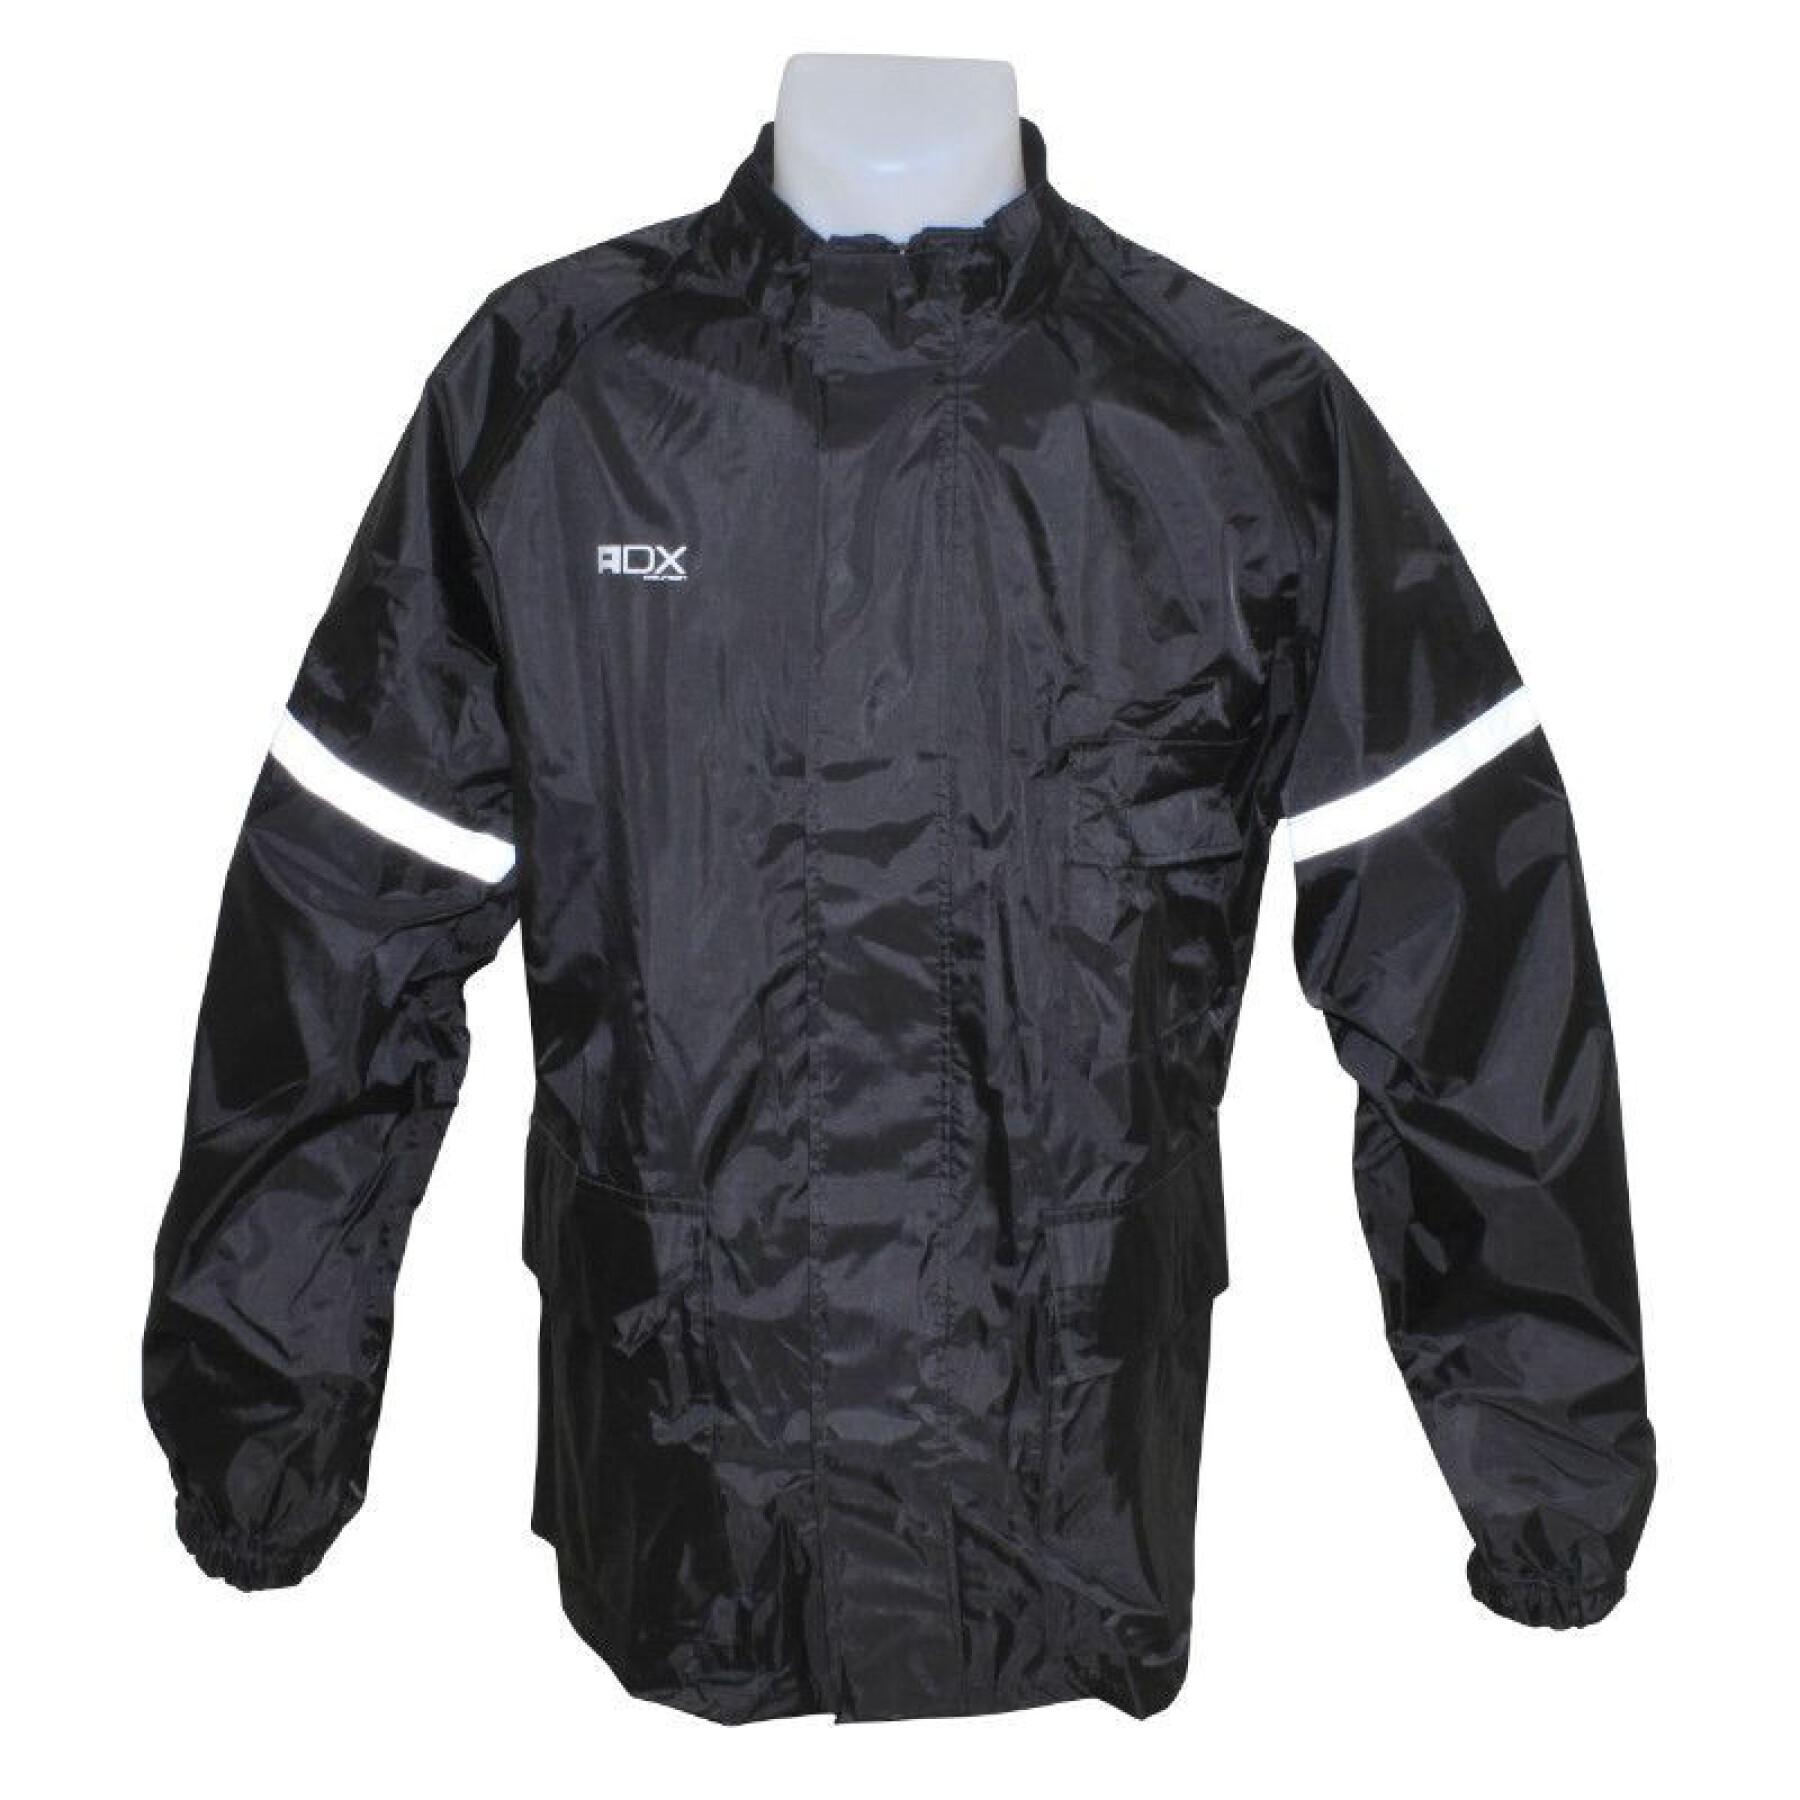 Motorcycle rain jacket ADX Eco